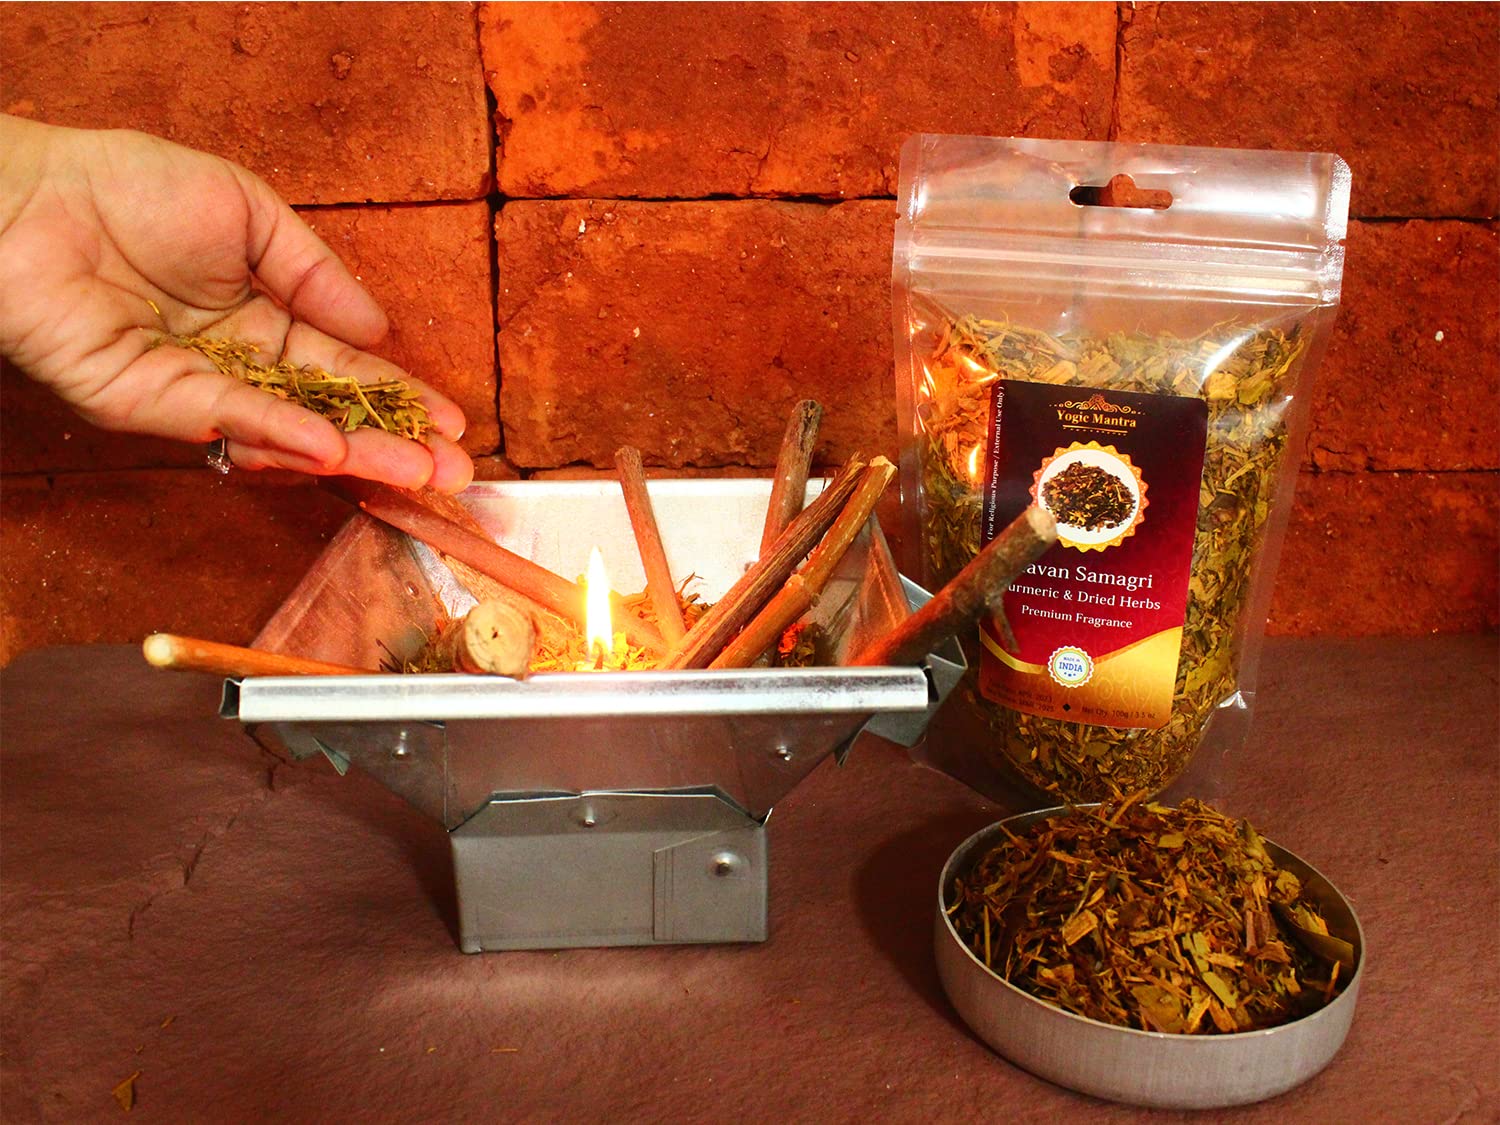 Yogic Mantra Havan Samagri for Burning (100g Fragrant Dried Herbs with Turmeric) Hawan Kund Home Puja, Yagya, and Holy Hindu Pooja Religious Ceremony, Worship & Rituals